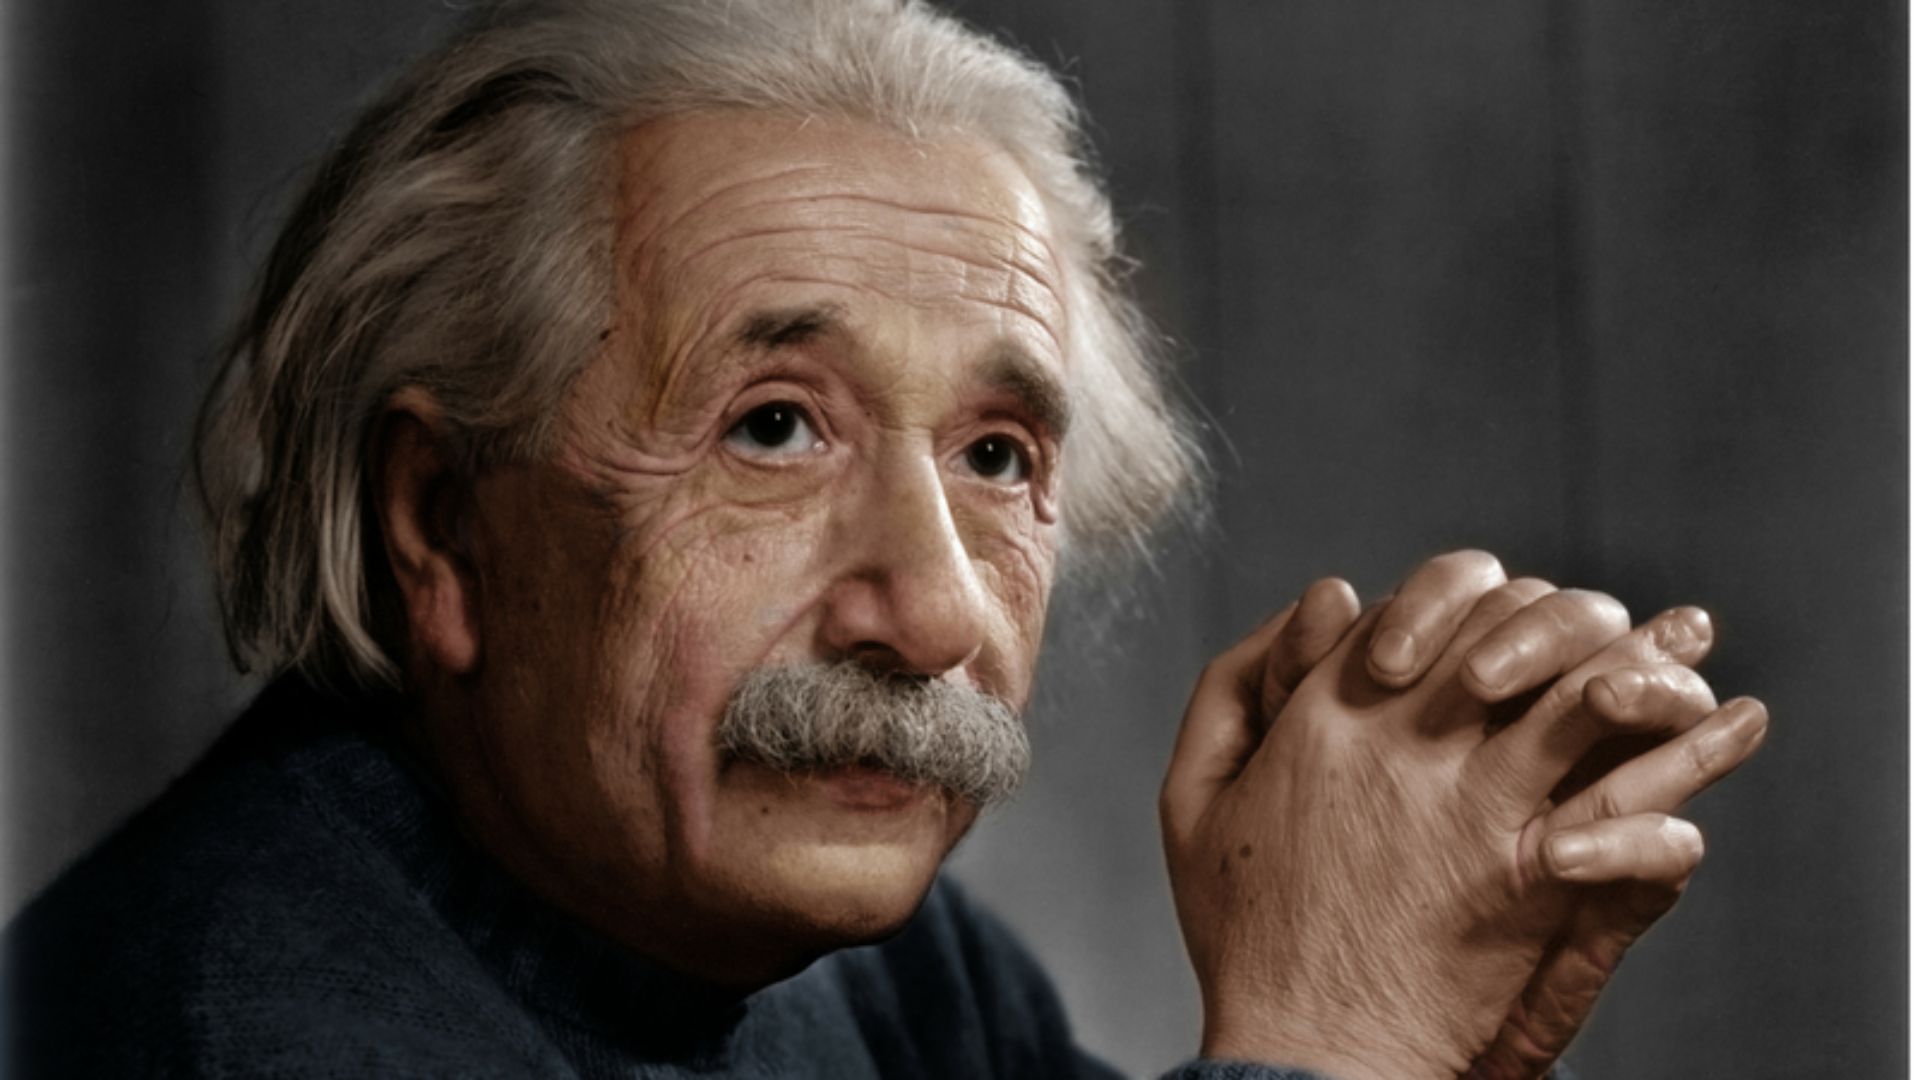 Einstein Life Path 33 - A Journey Of A Spiritual Genius